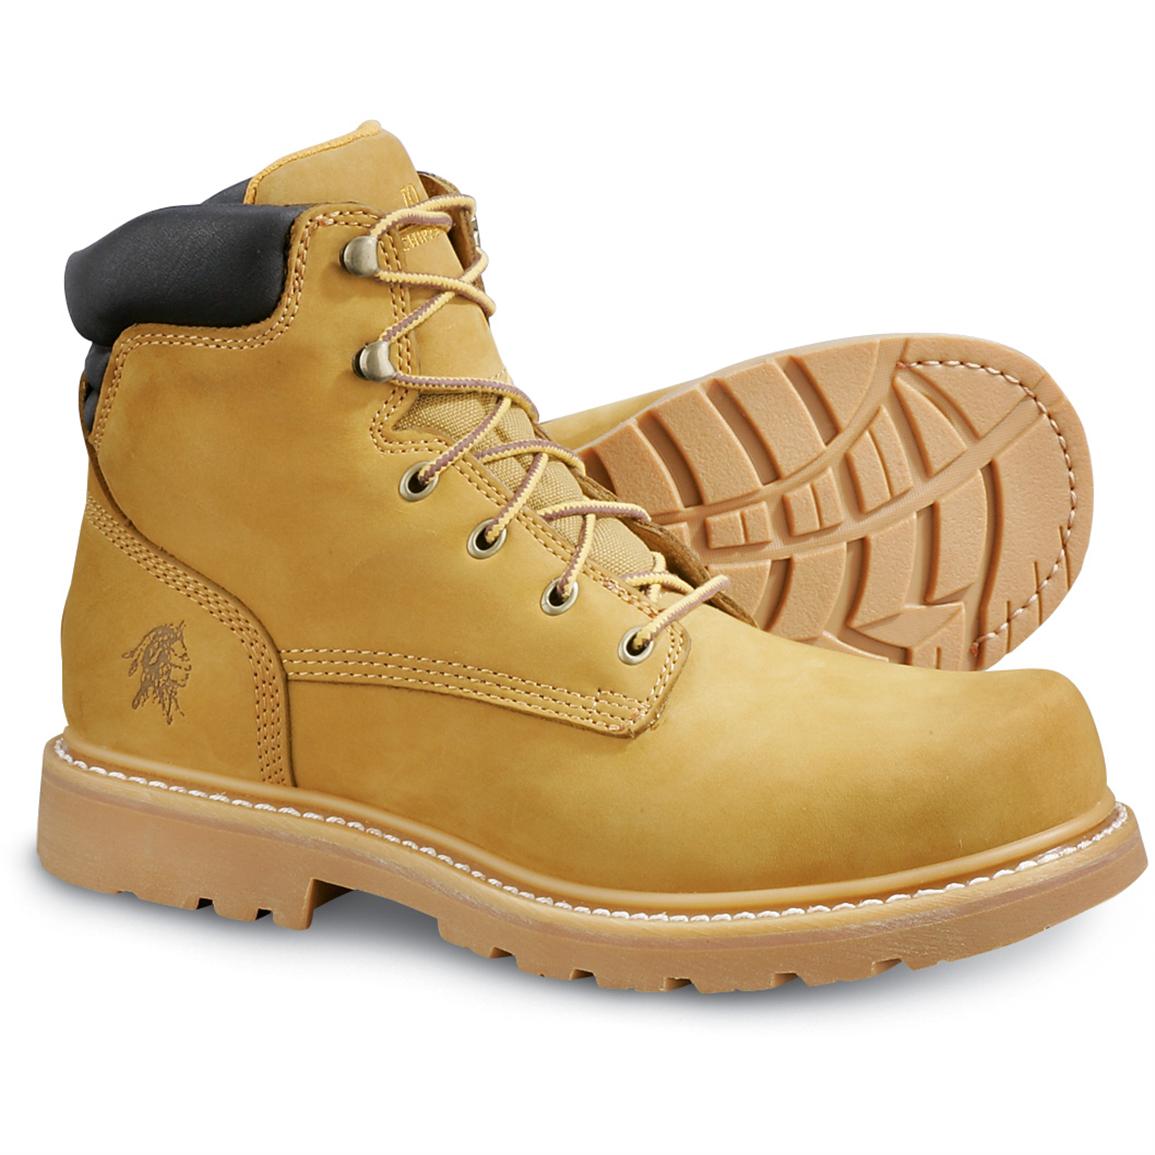 IQ Steel Toe Boots, Golden Tan 